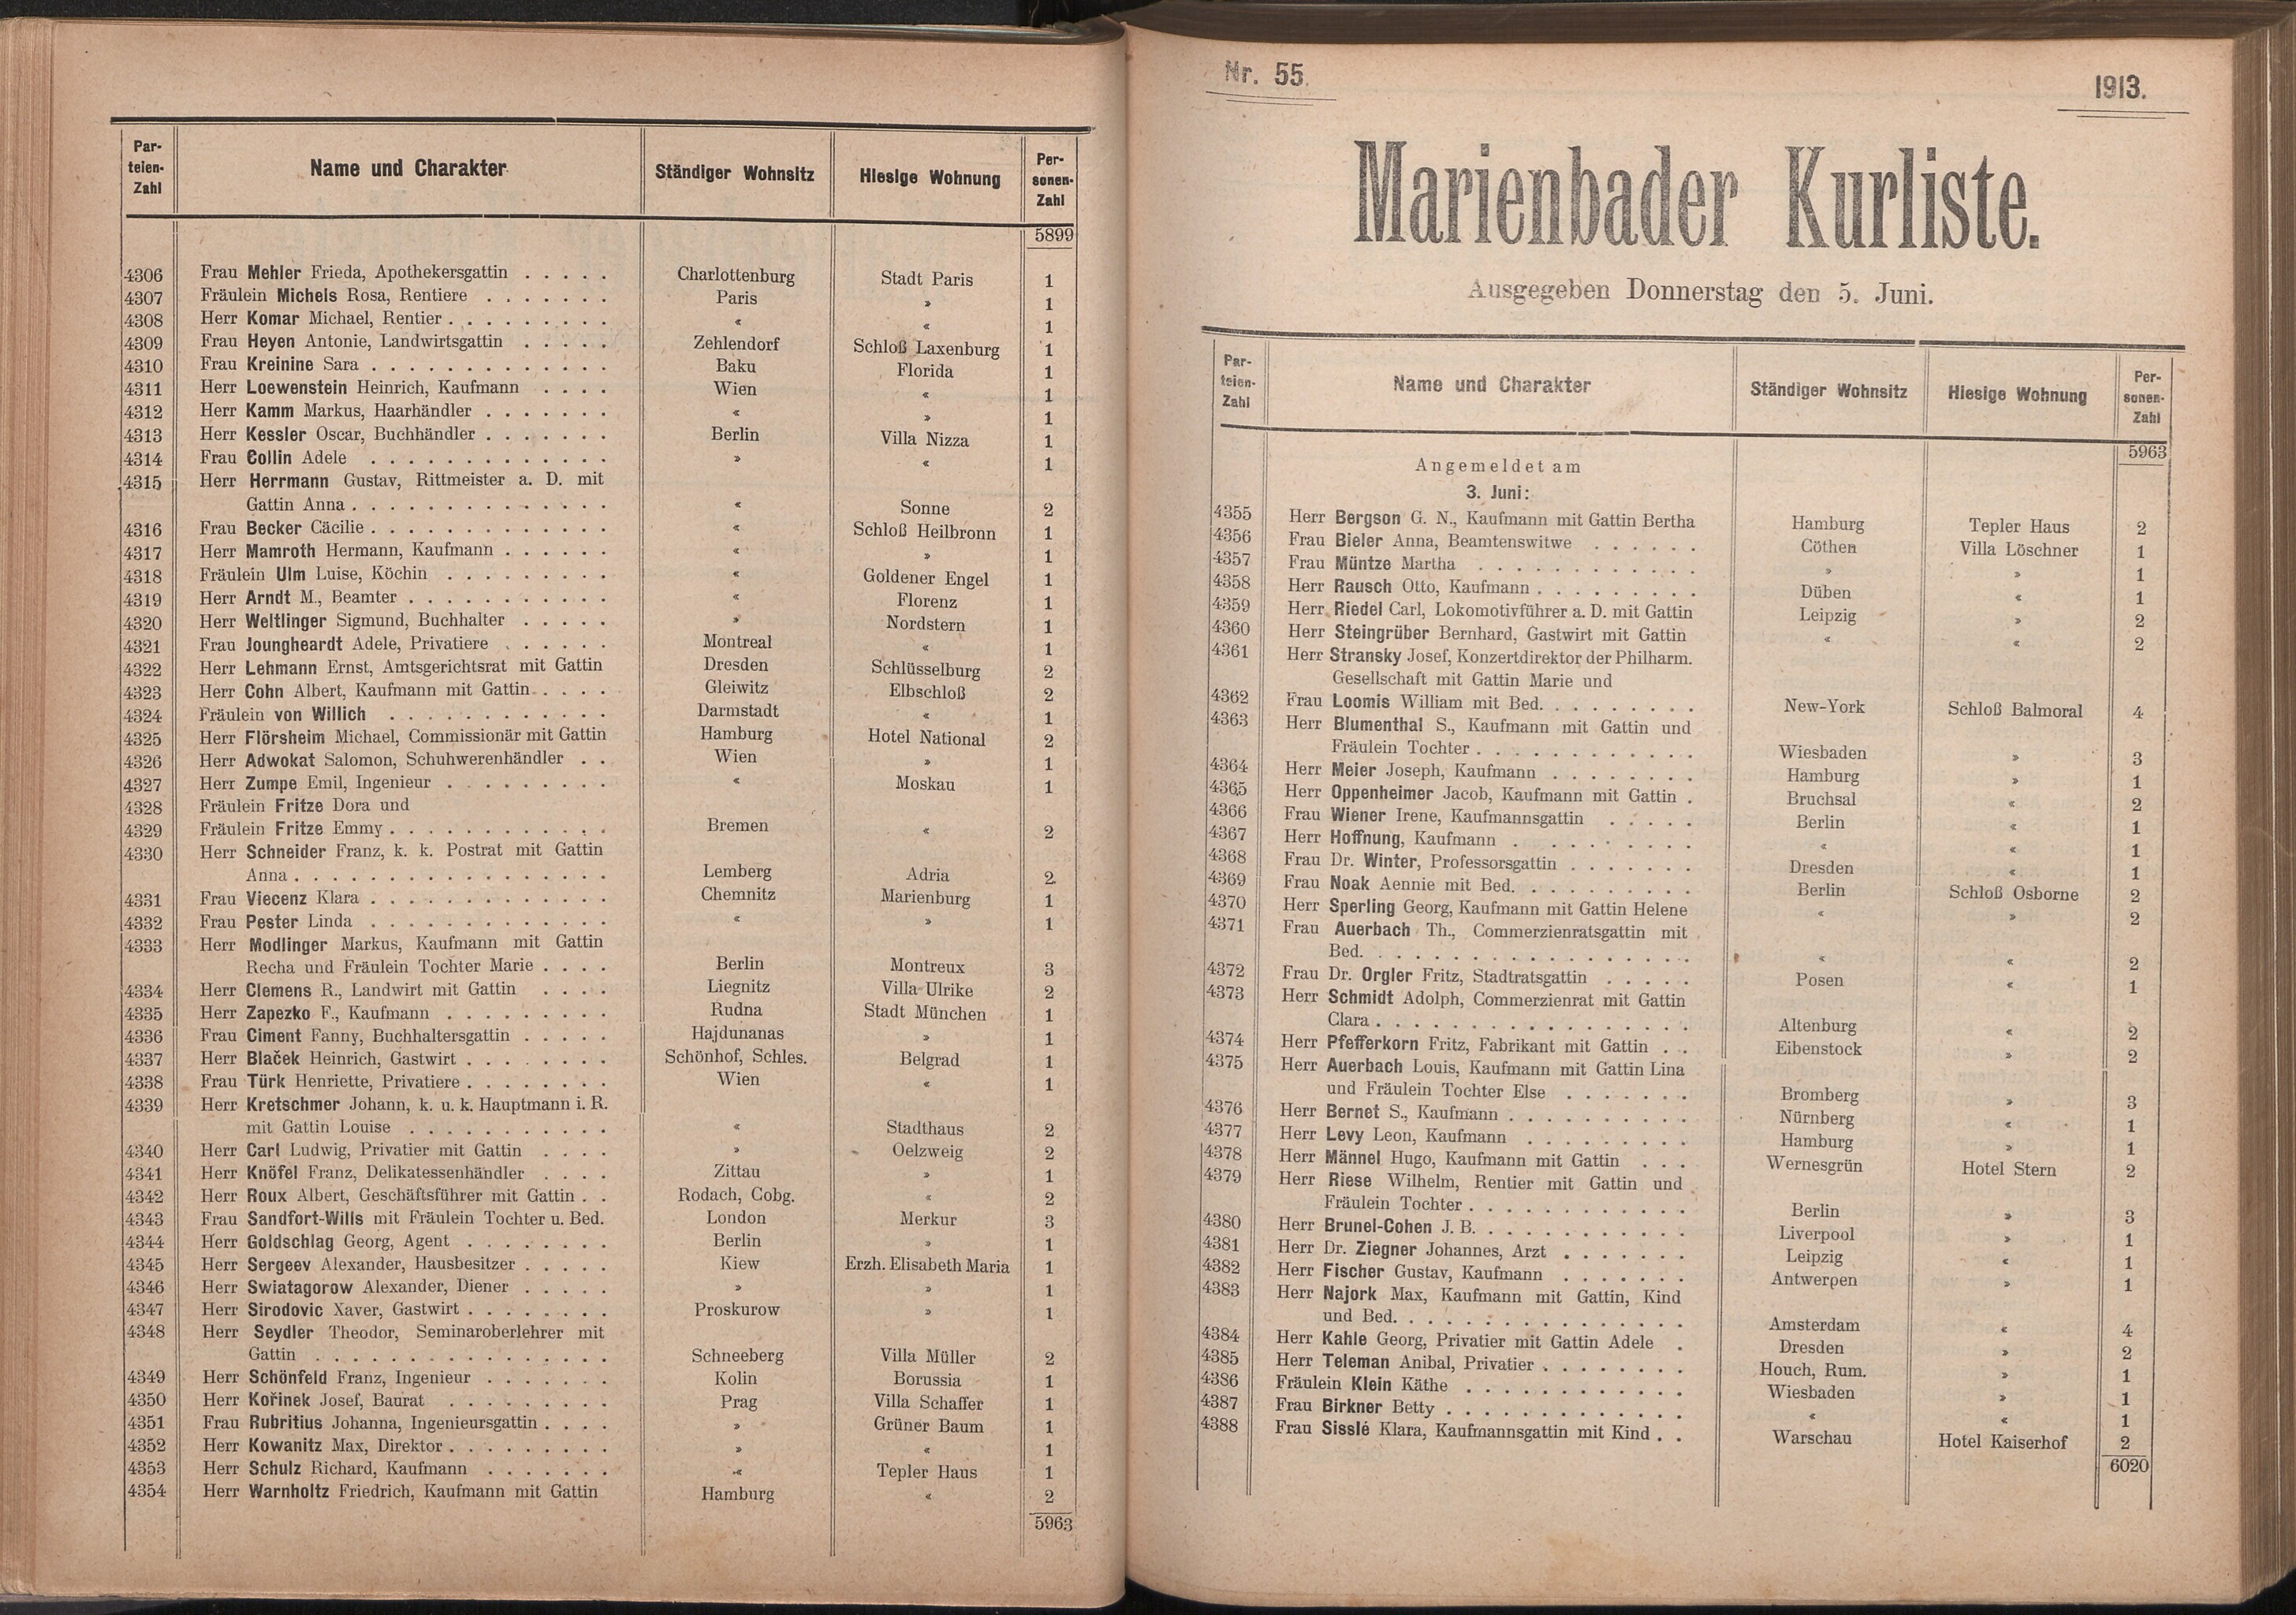 72. soap-ch_knihovna_marienbader-kurliste-1913_0720